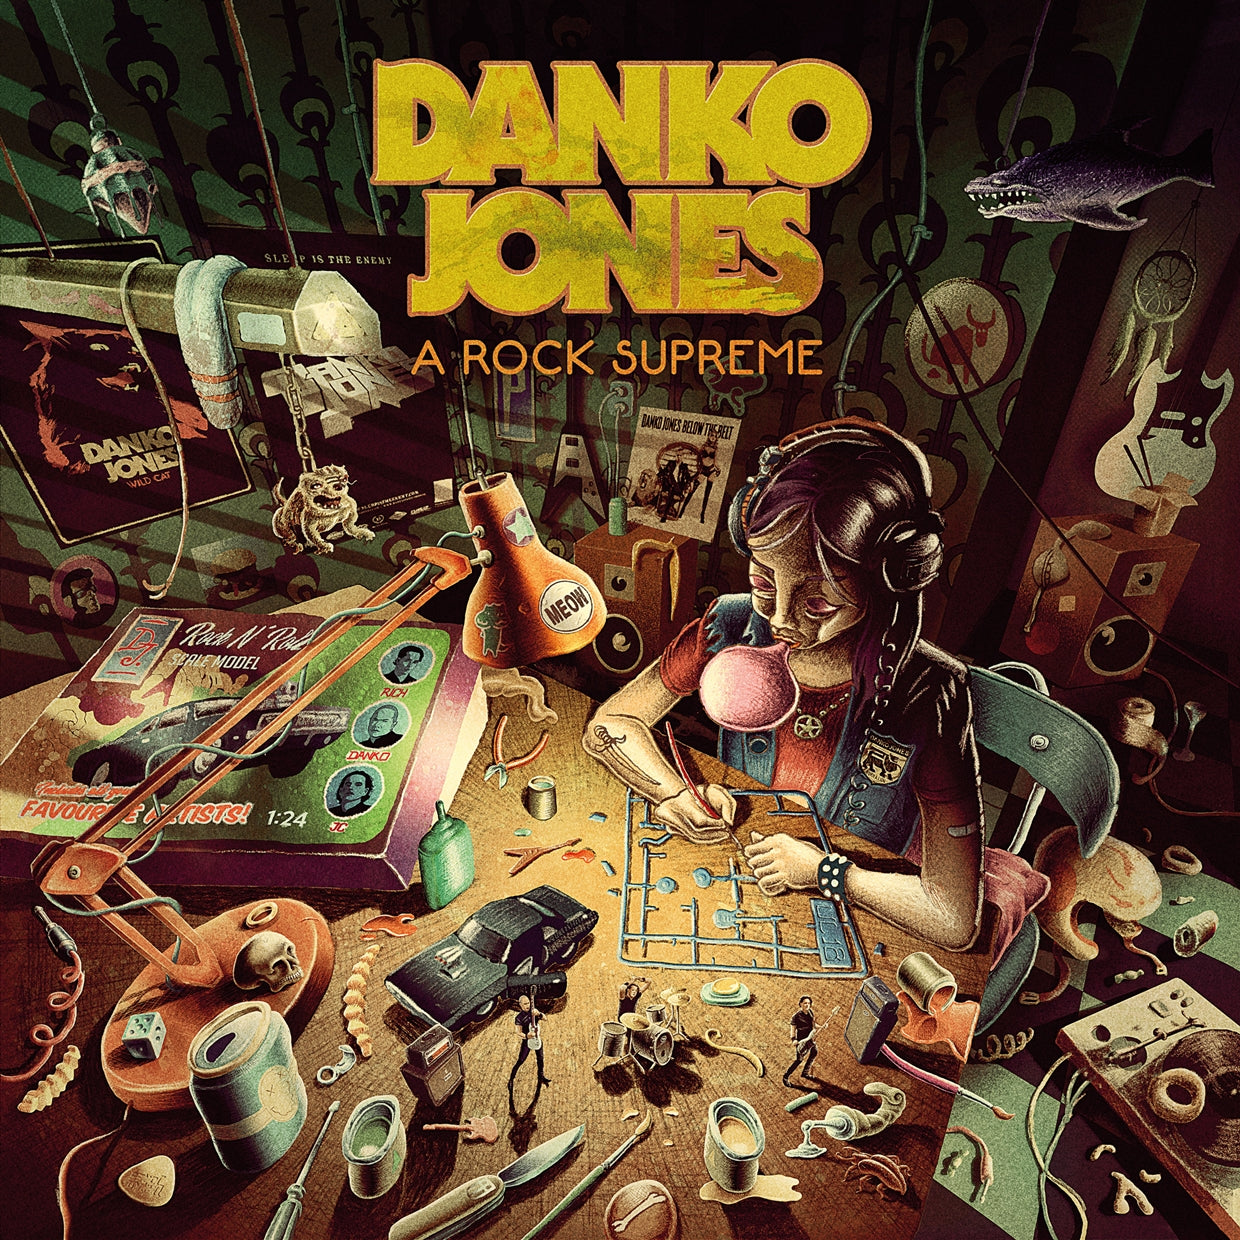 Danko Jones "A Rock Supreme" Burgundy Vinyl